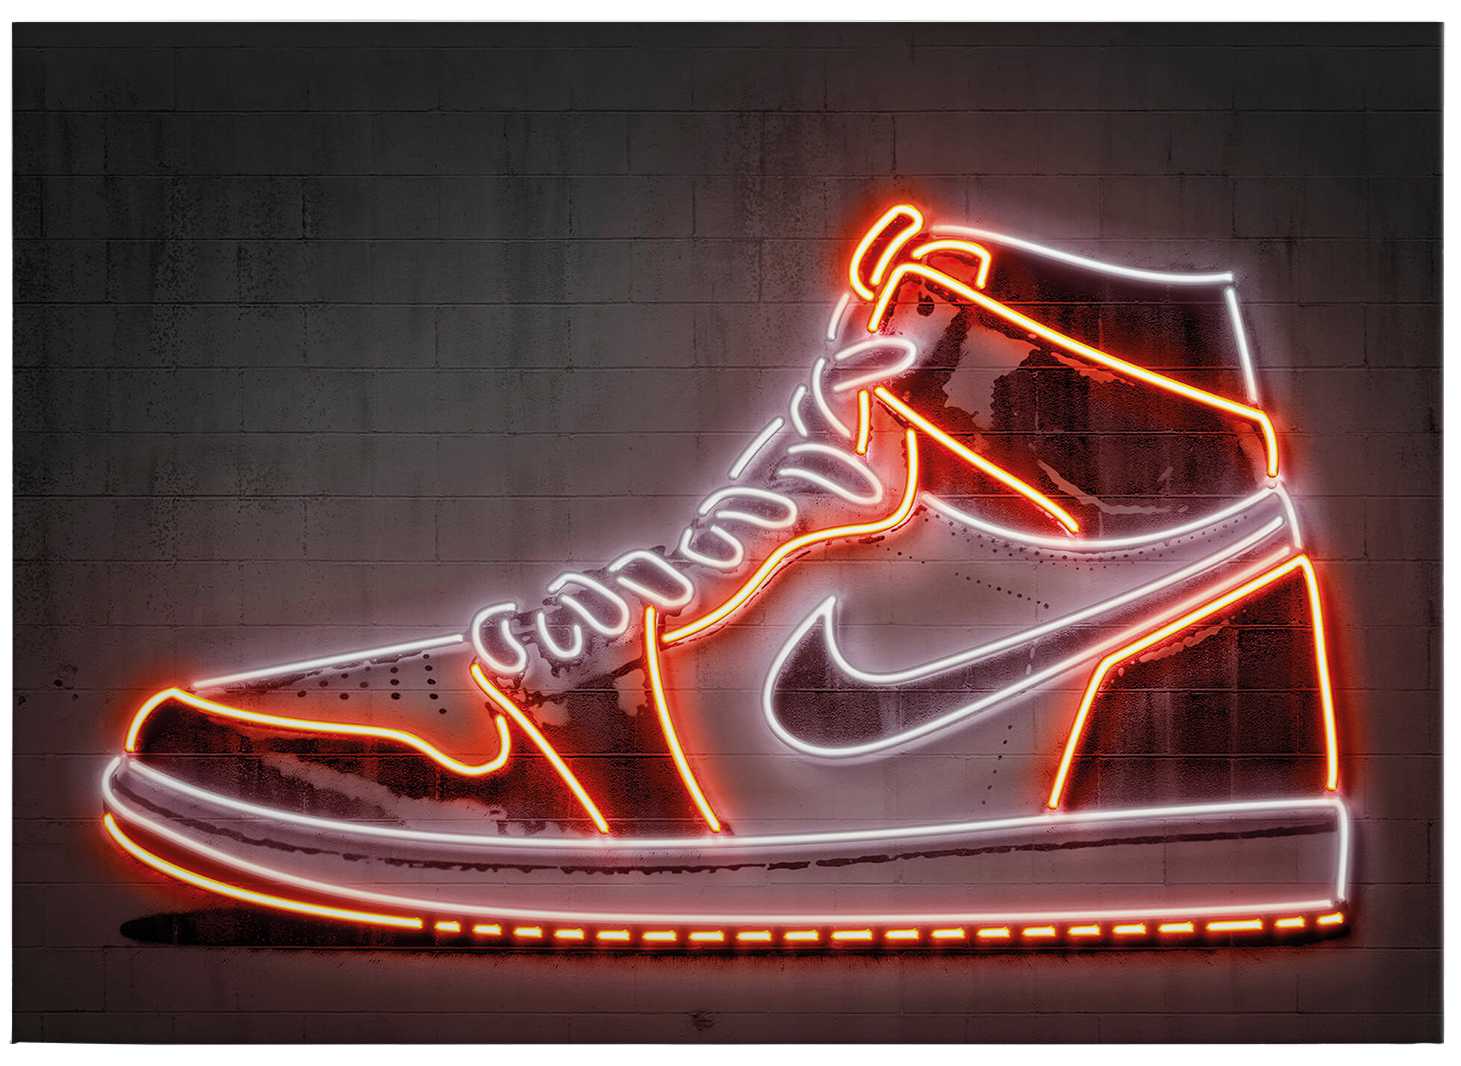             Cuadro Neon sign "Sneaker" by Mielu - 0,70 m x 0,50 m
        